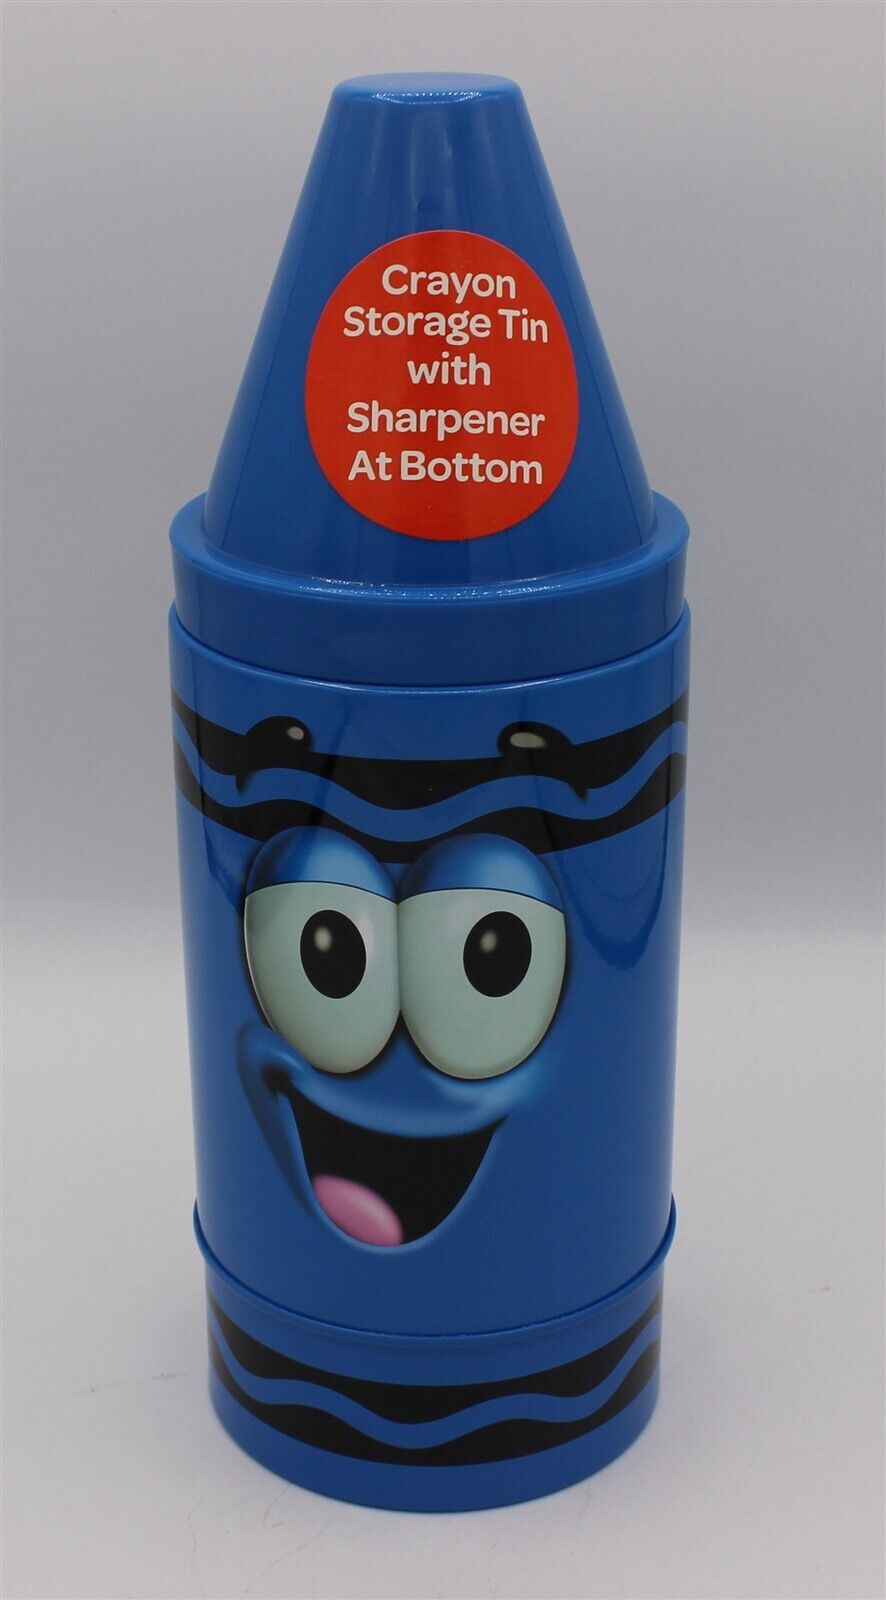 Crayola - Crayon Storage Tin With Sharpener At The Bottom - Blue